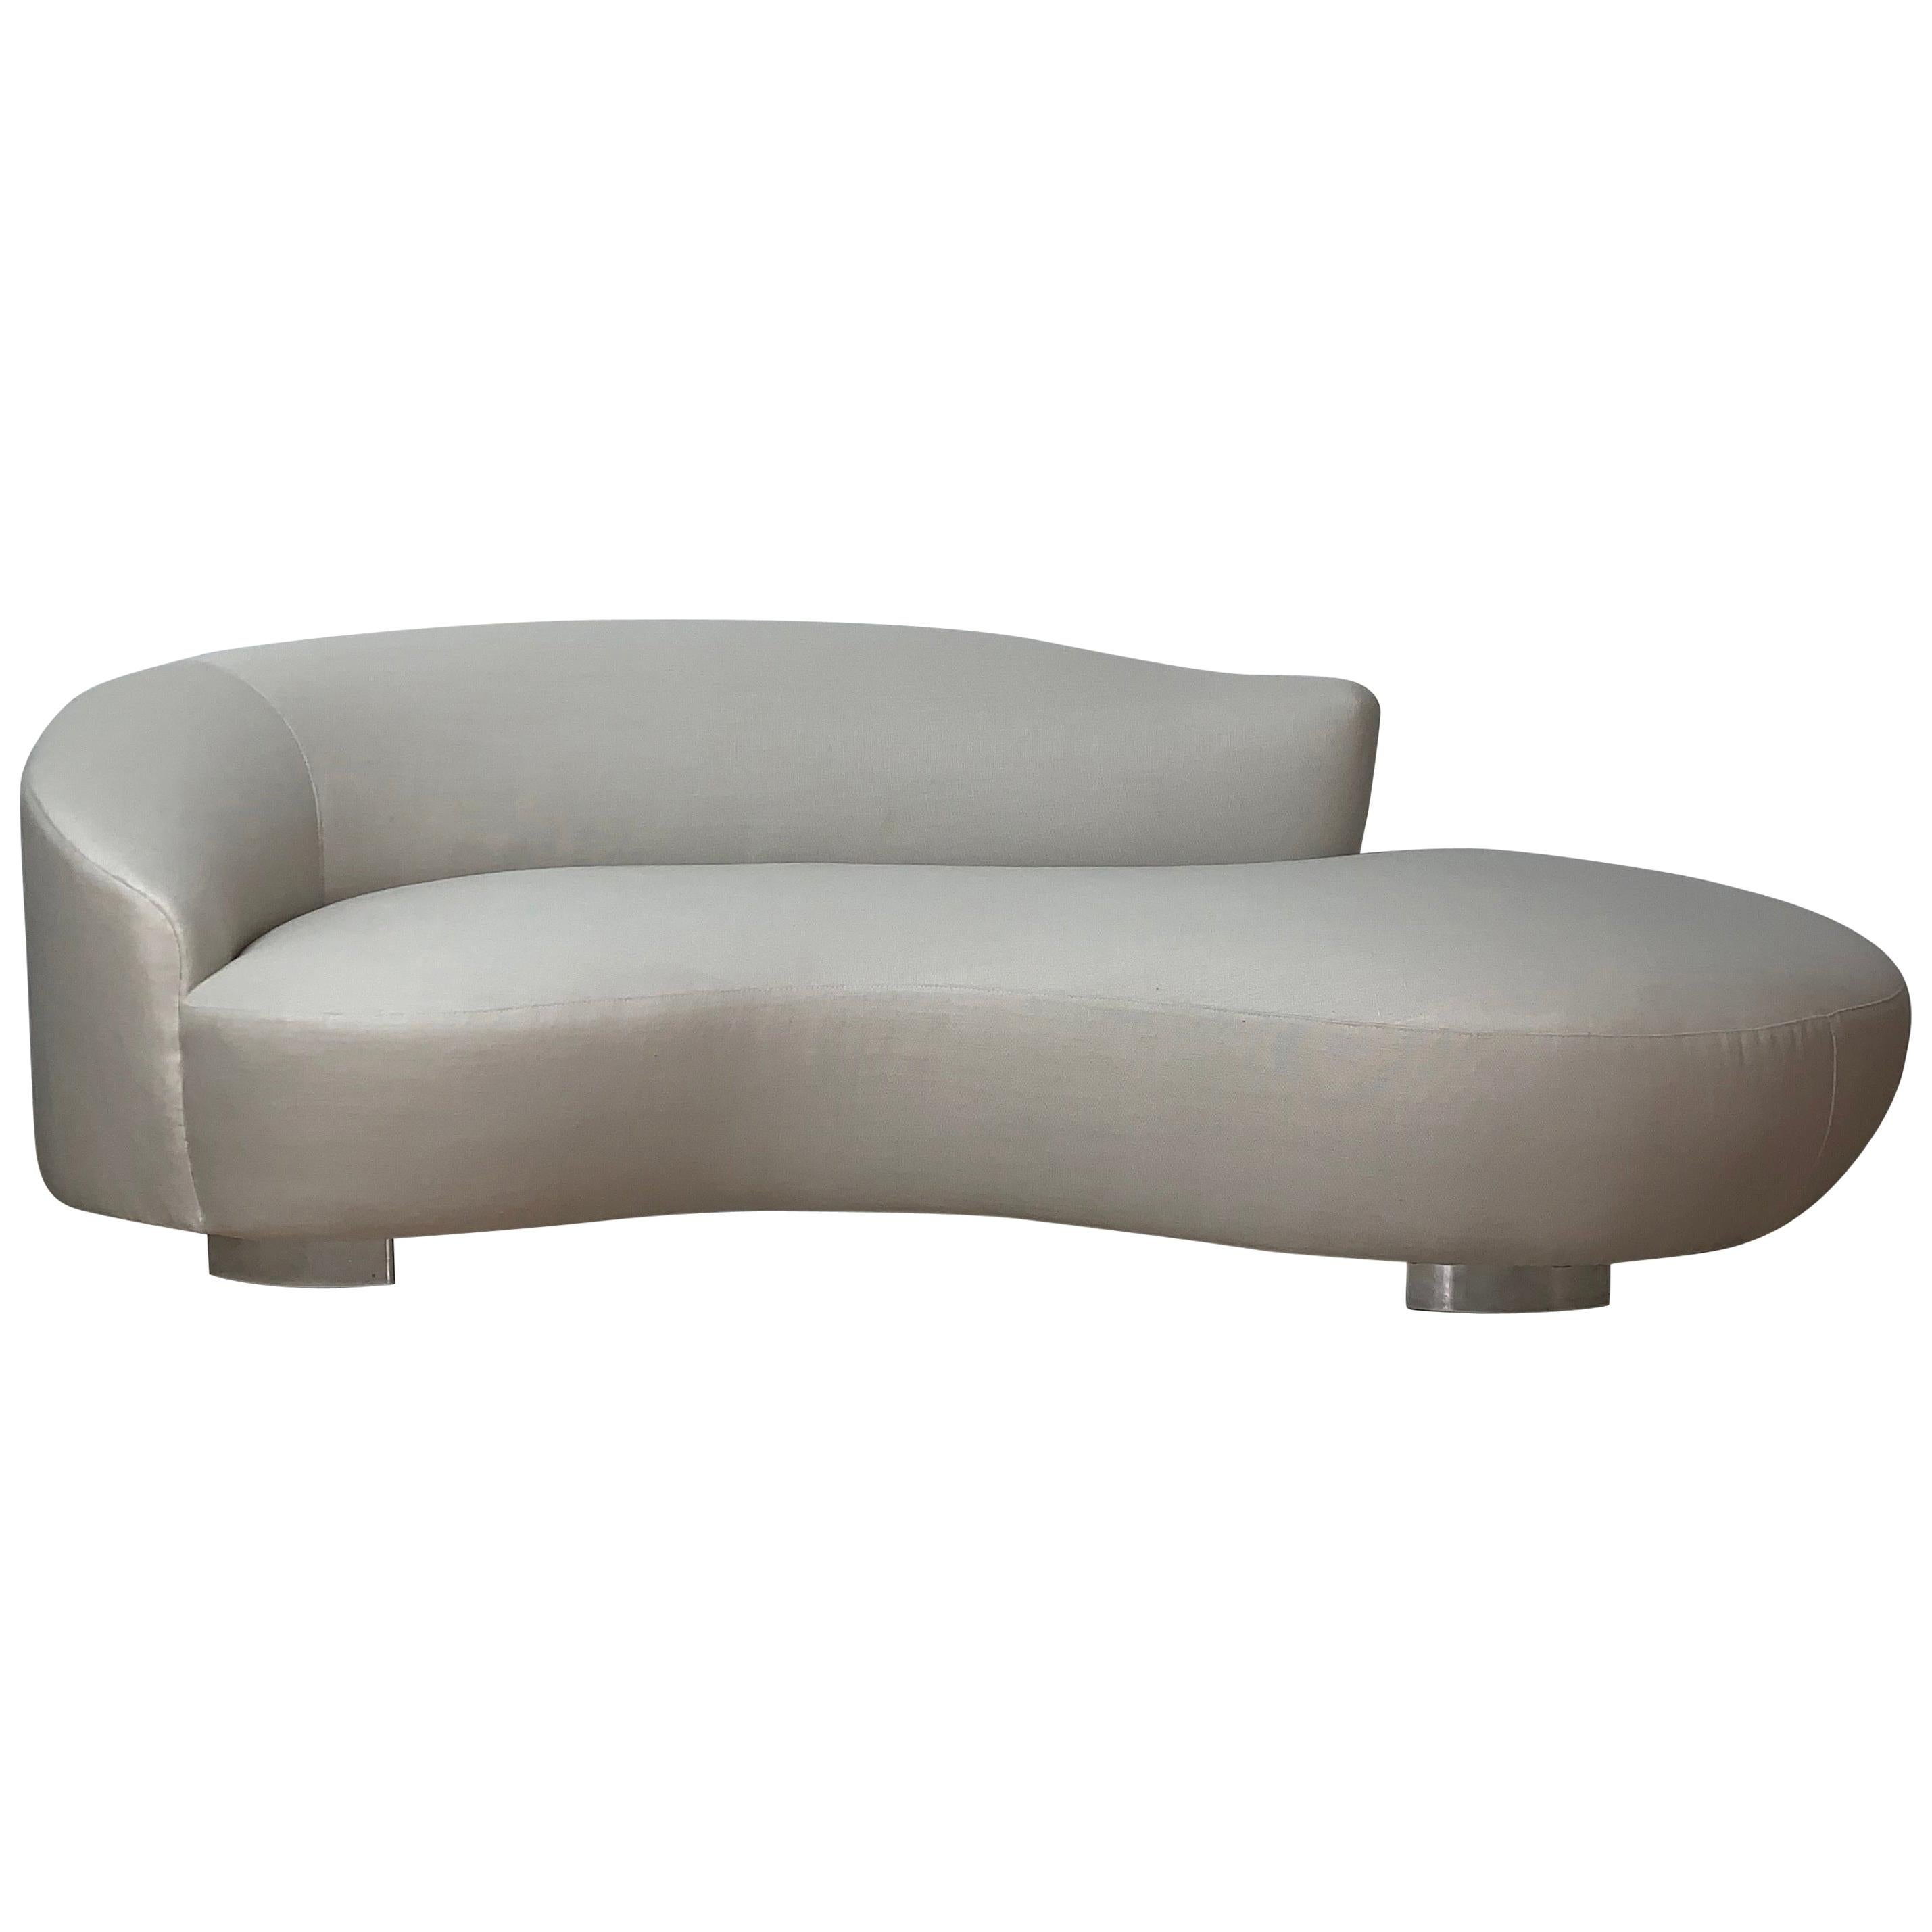 Vladimir Kagan Attributed Oyster Linen Serpentine "Cloud" Chaise Lounge Sofa